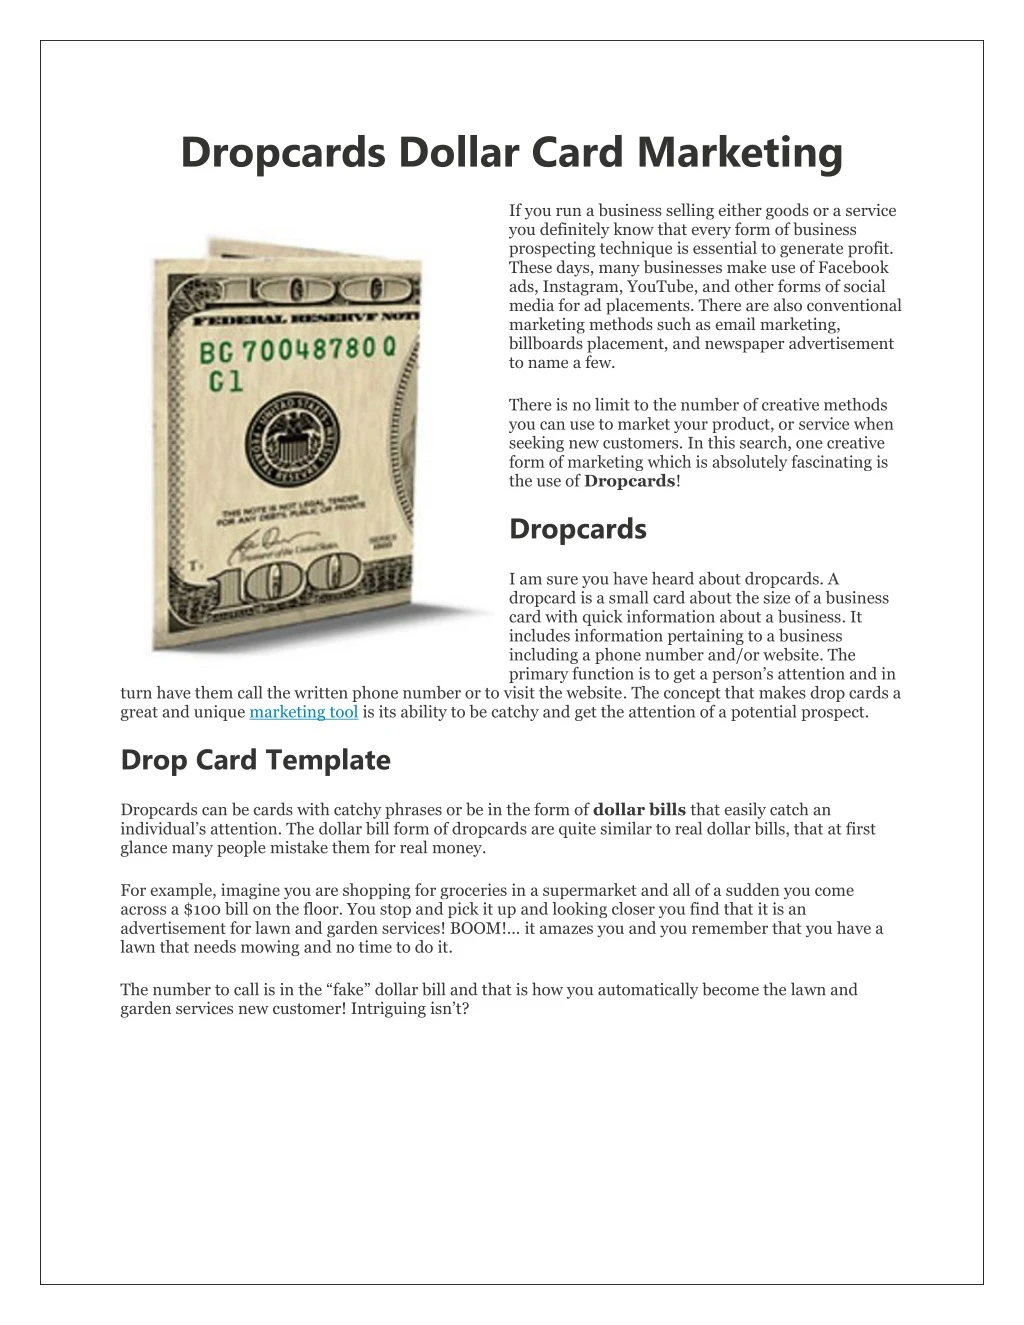 dropcards dollar card marketing